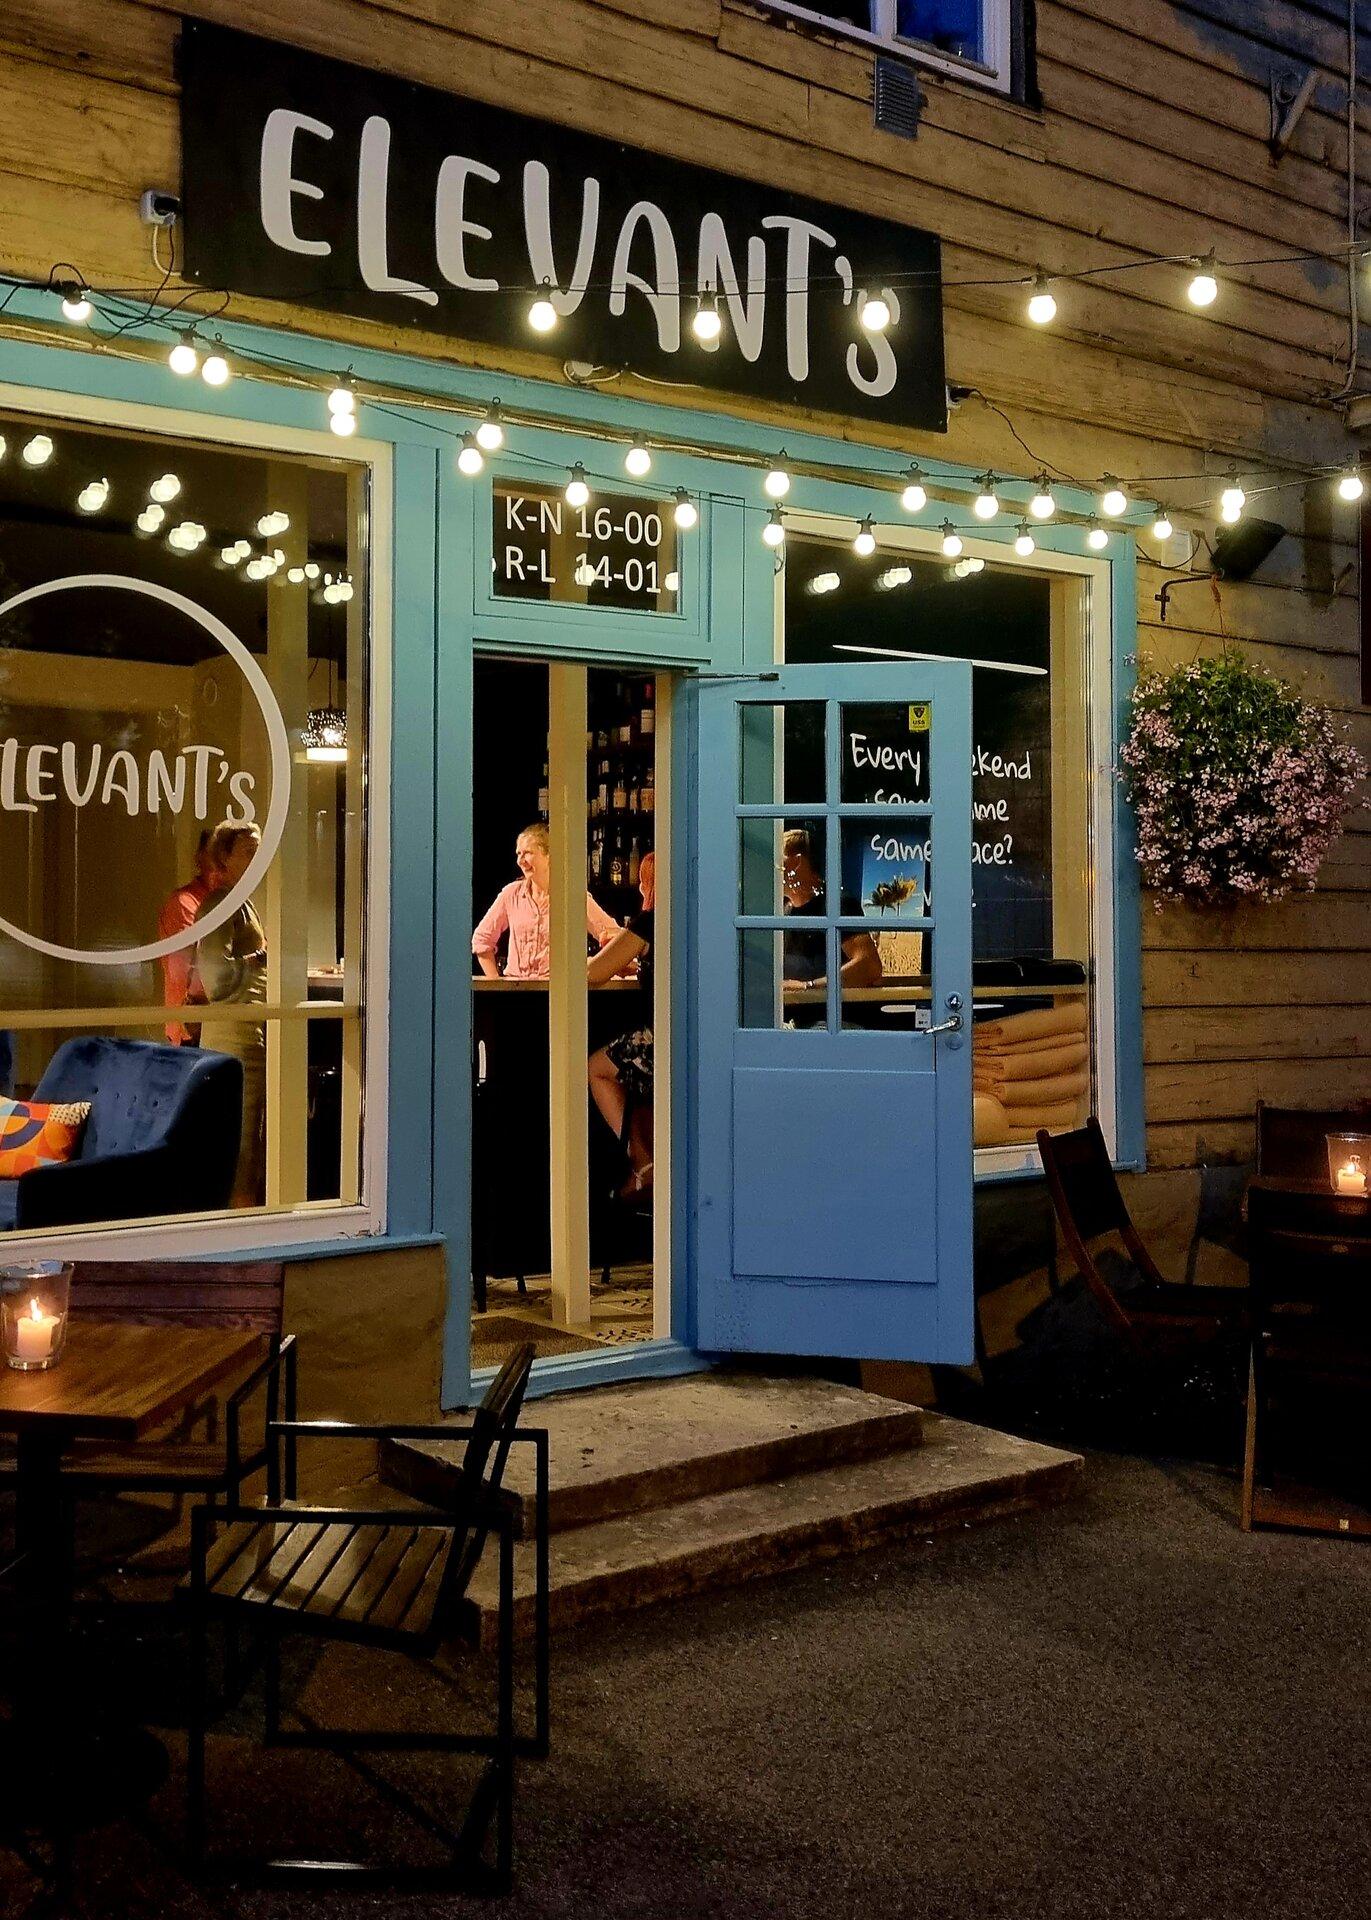 Wine bar Elevant's